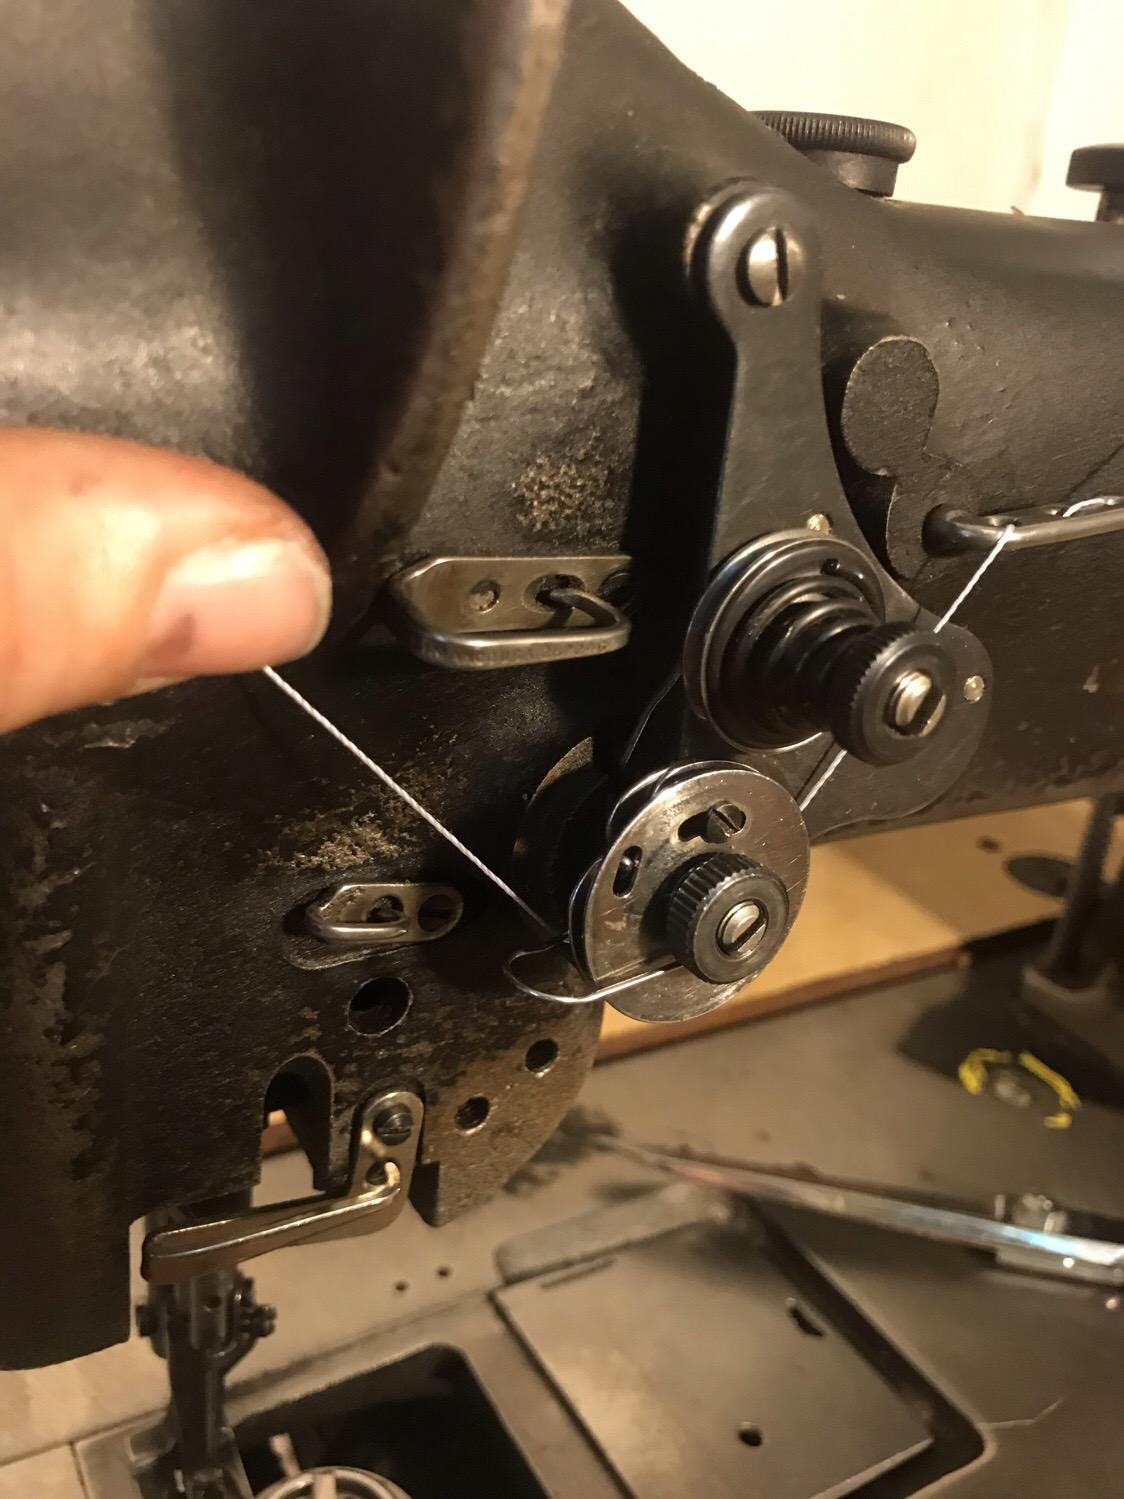 Singer 111W155 presser foot adjustment - Leather Sewing Machines 